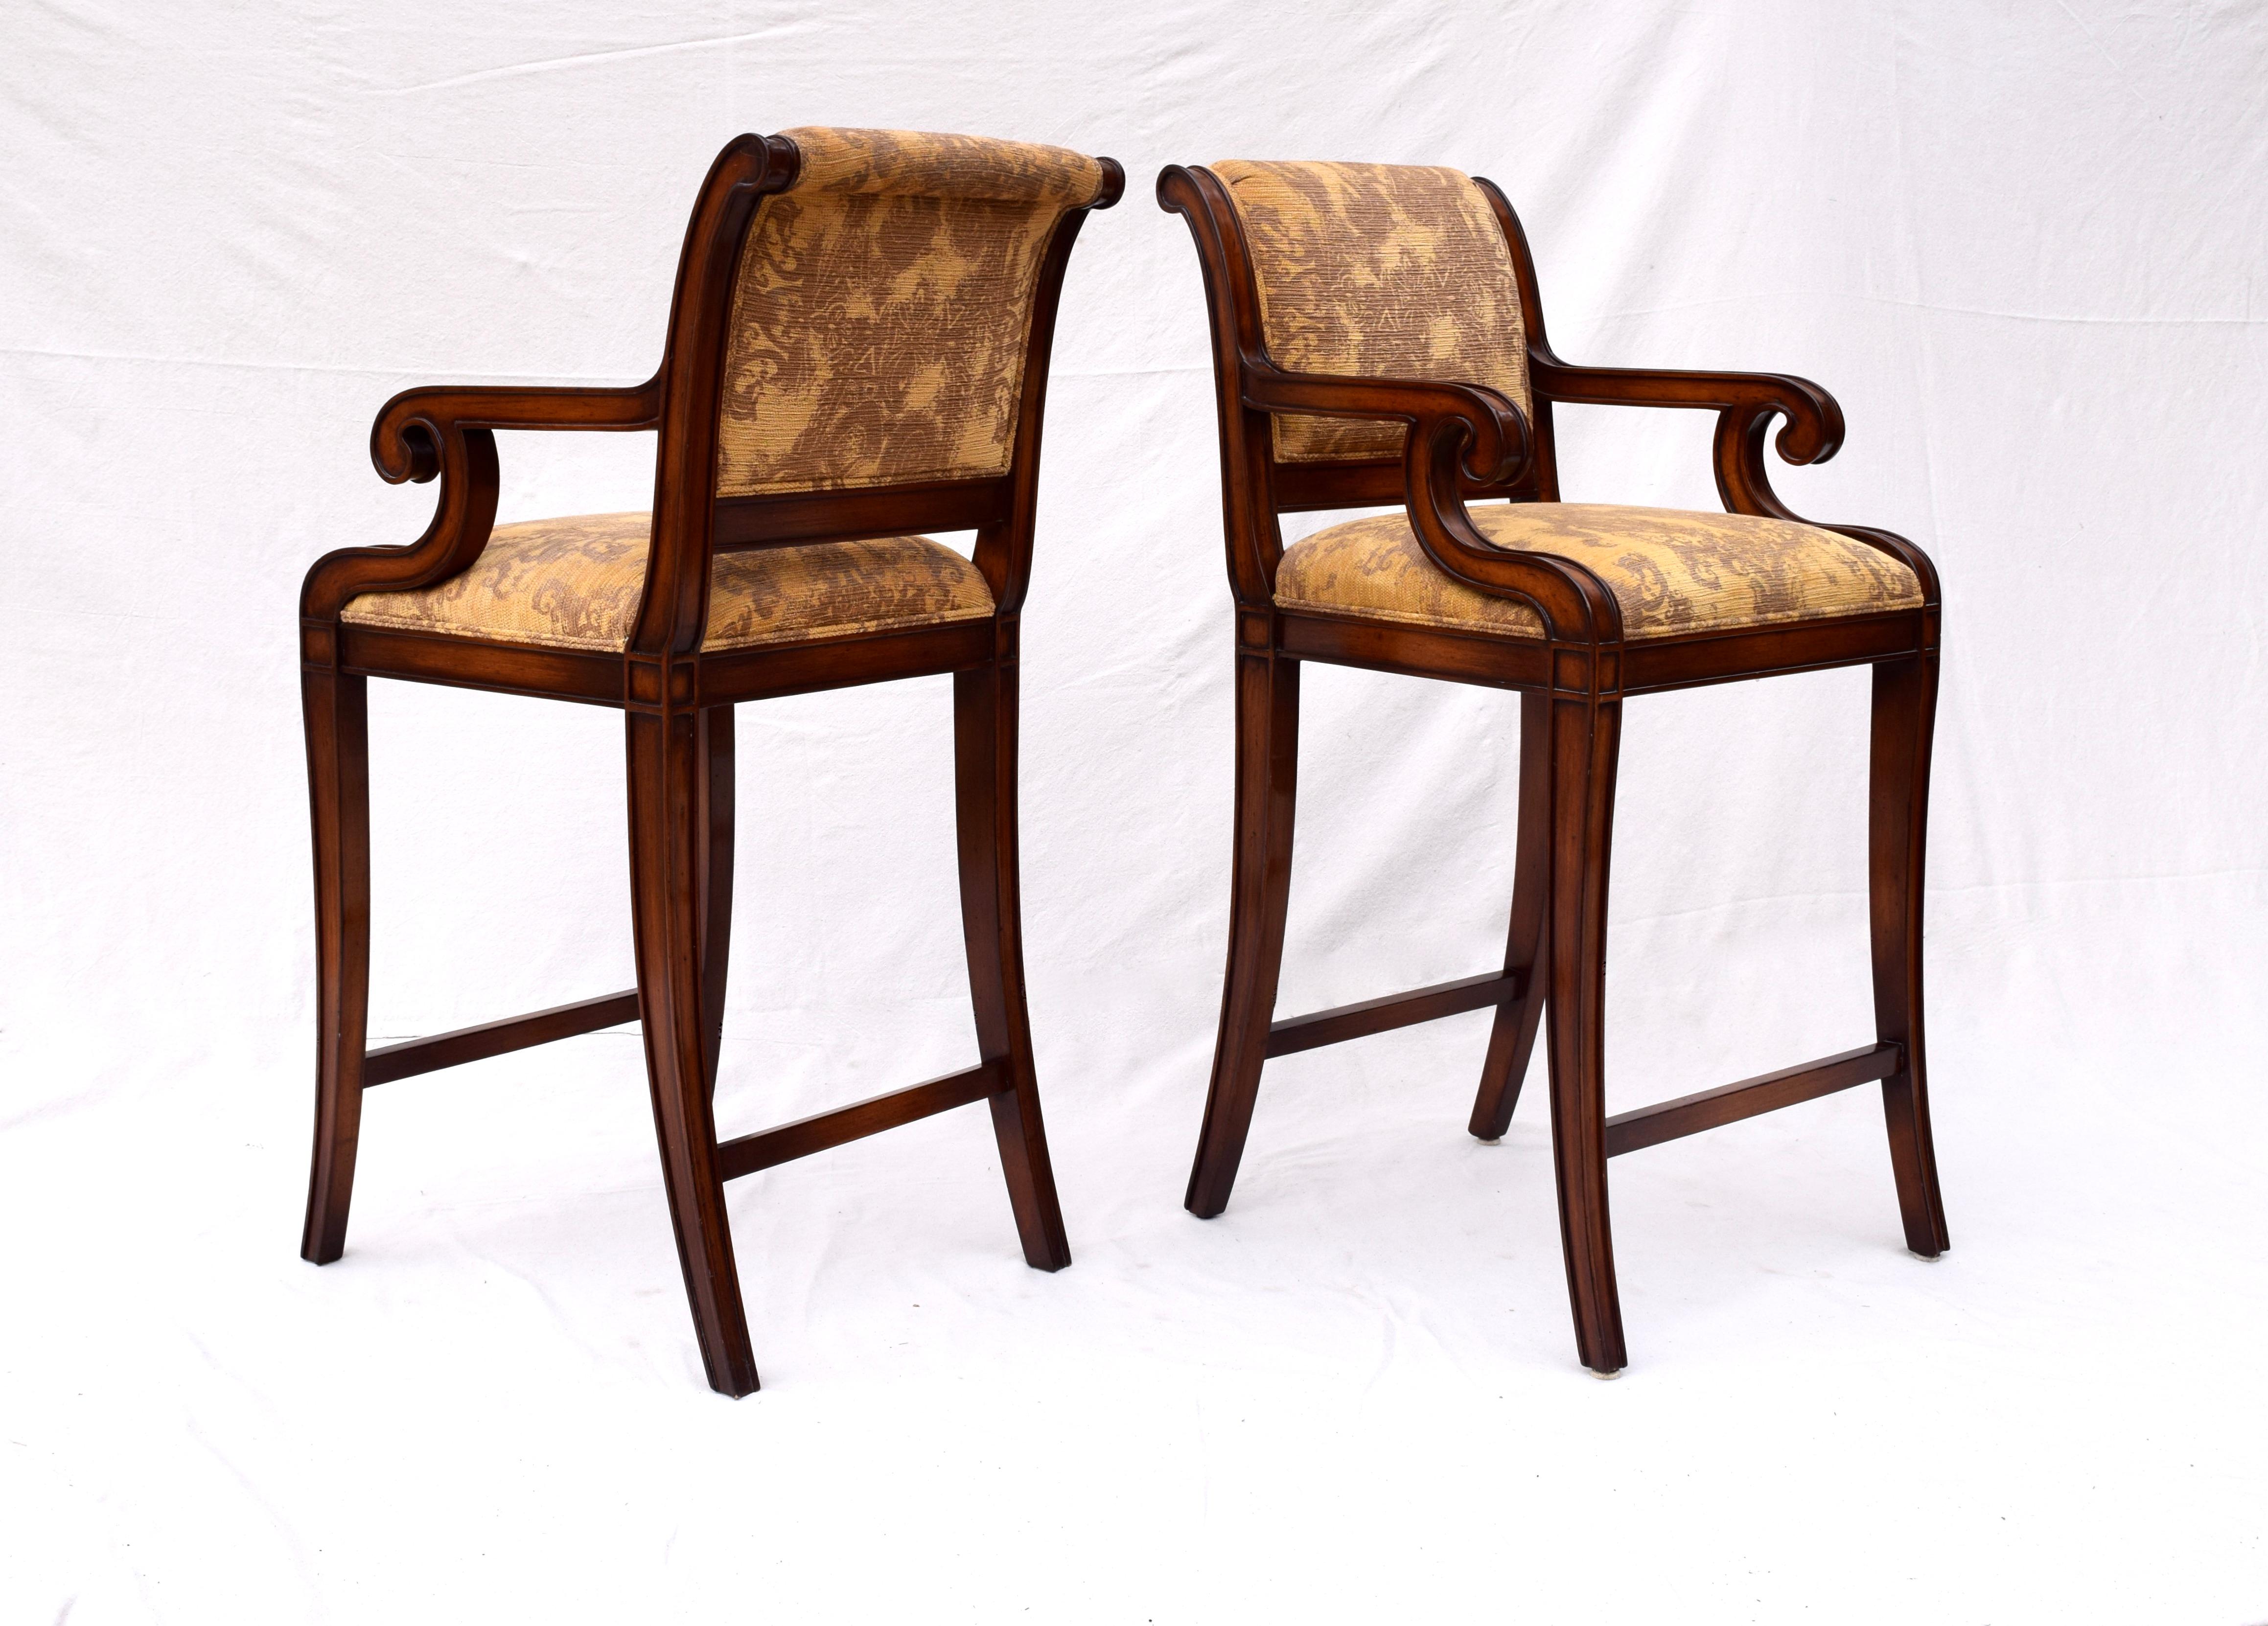 Contemporary Nancy Corzine Classic Regency Bar Stool Chairs, Pair